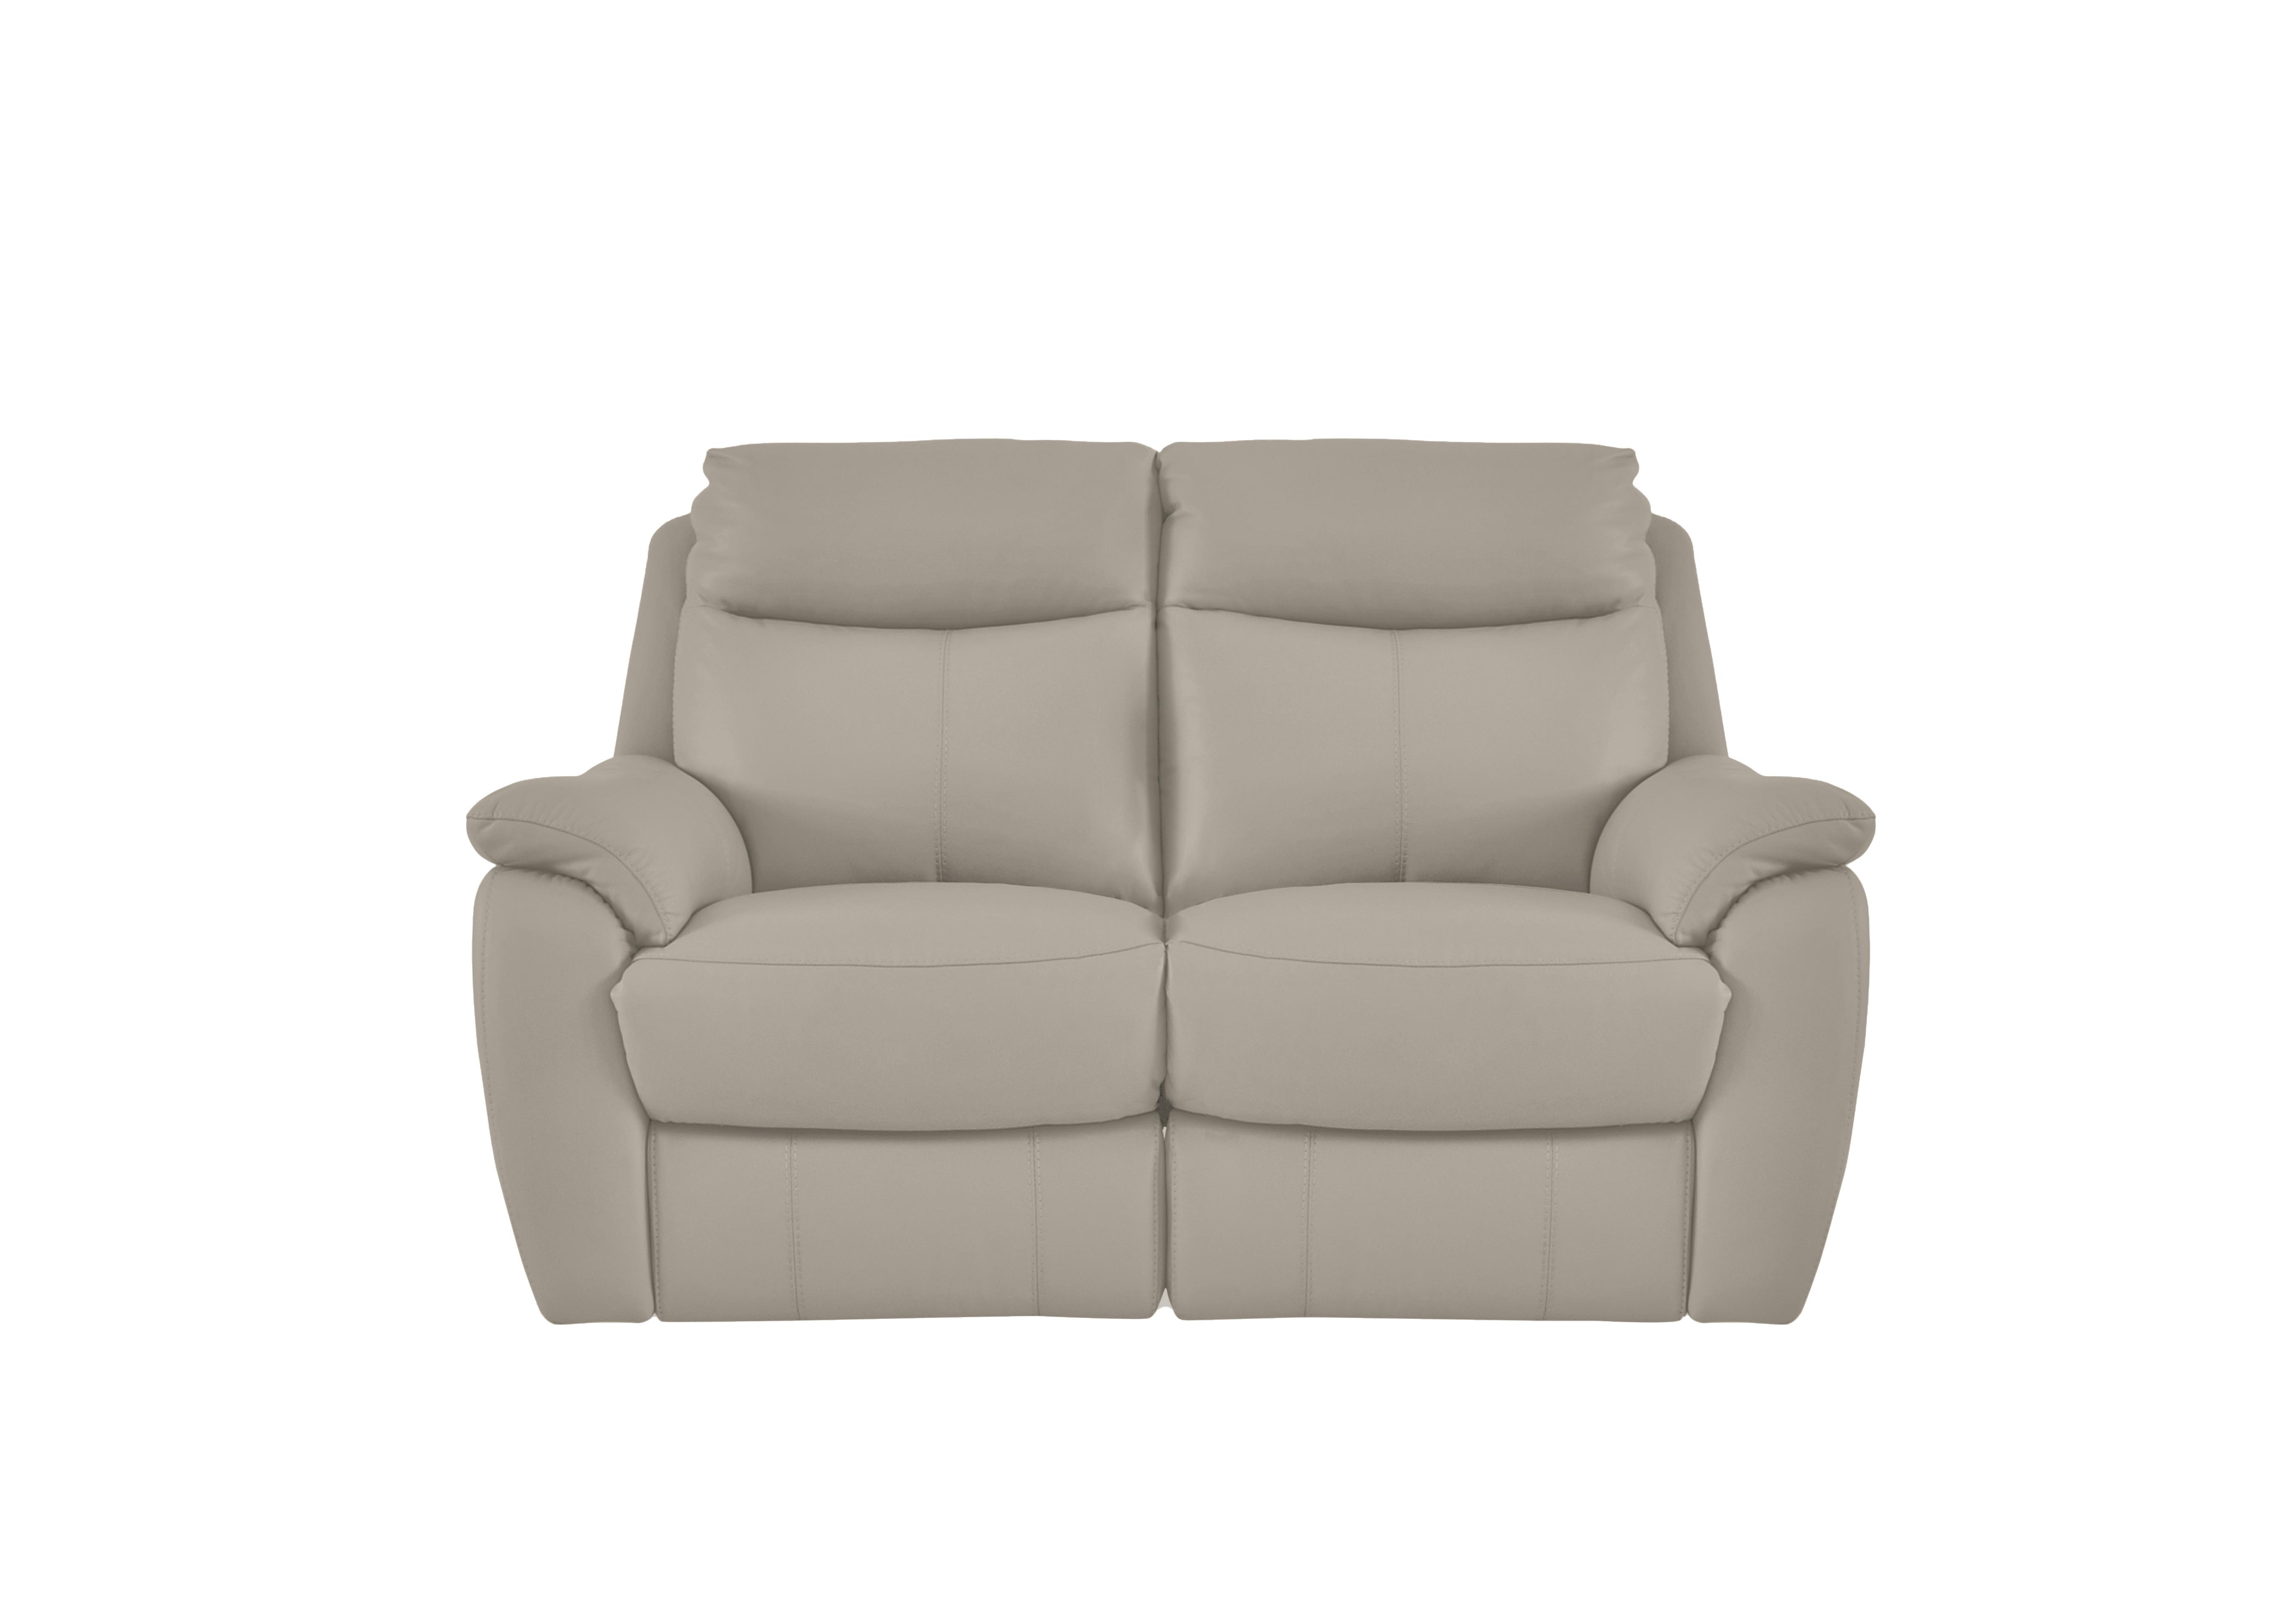 Snug 2 Seater Leather Sofa in Bv-946b Silver Grey on Furniture Village